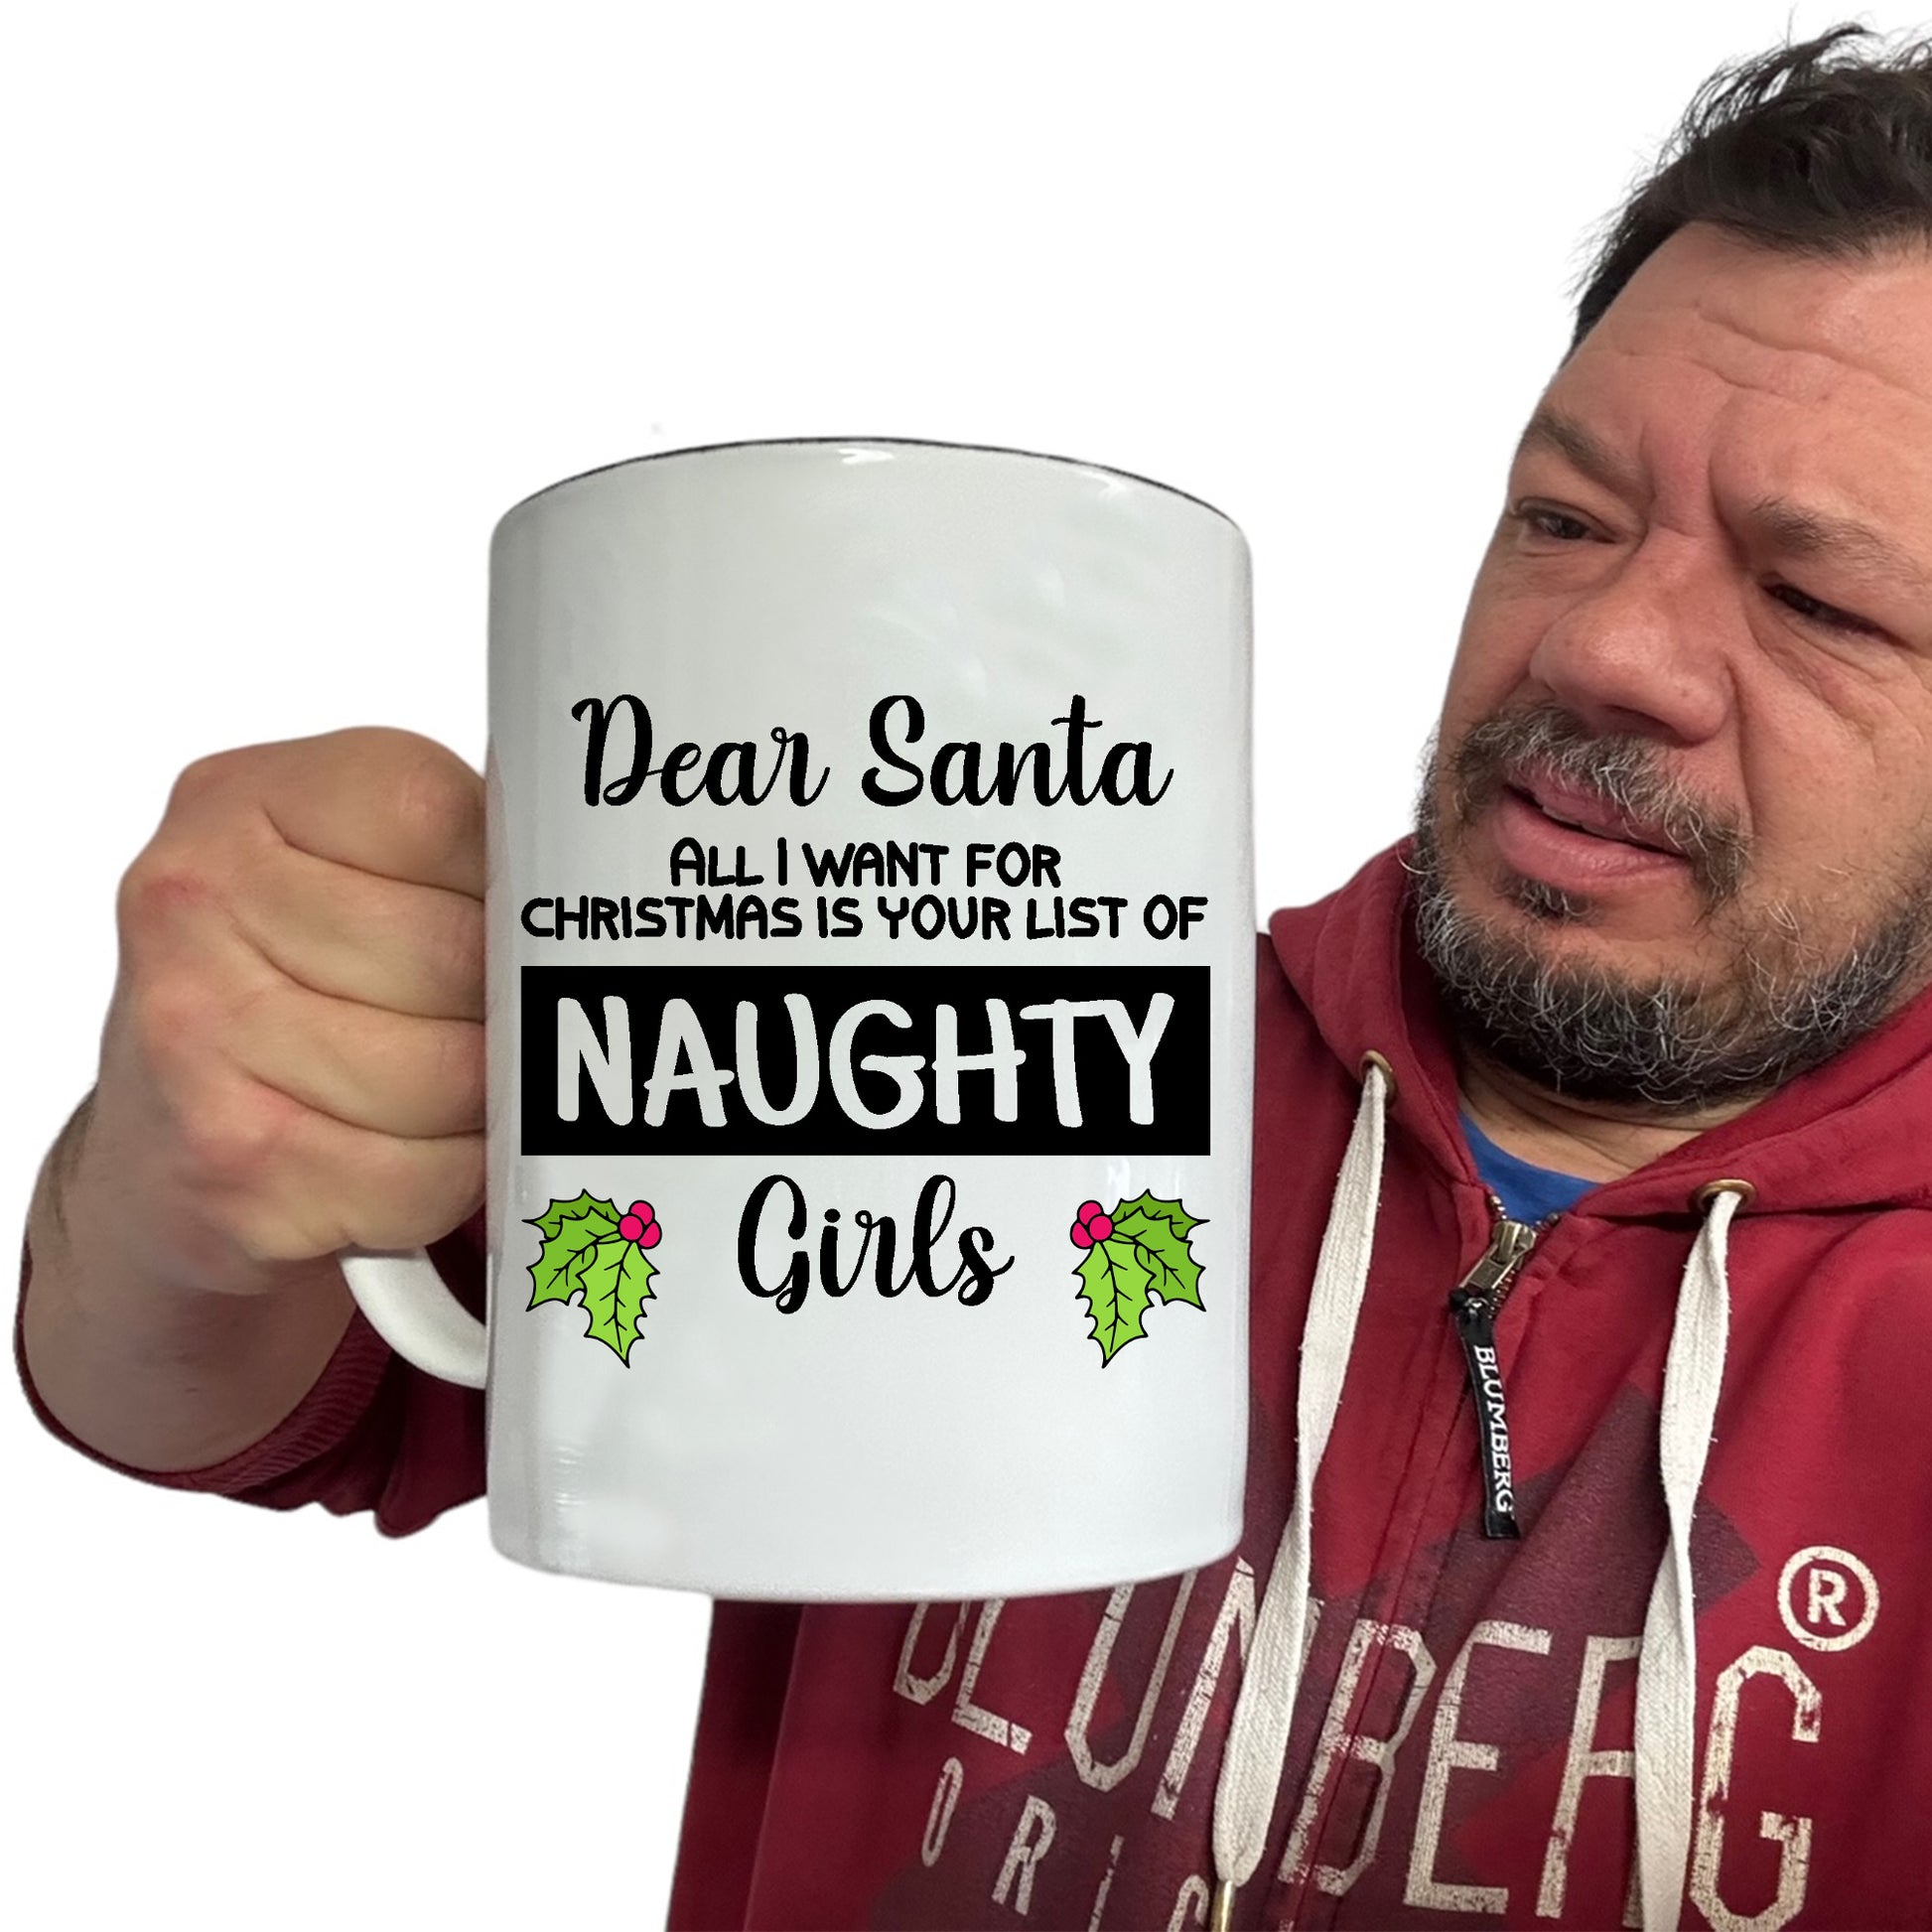 The Christmas Hub - Christmas Xmas Dear Santa All I Want Naughty Girls - Funny Giant 2 Litre Mug